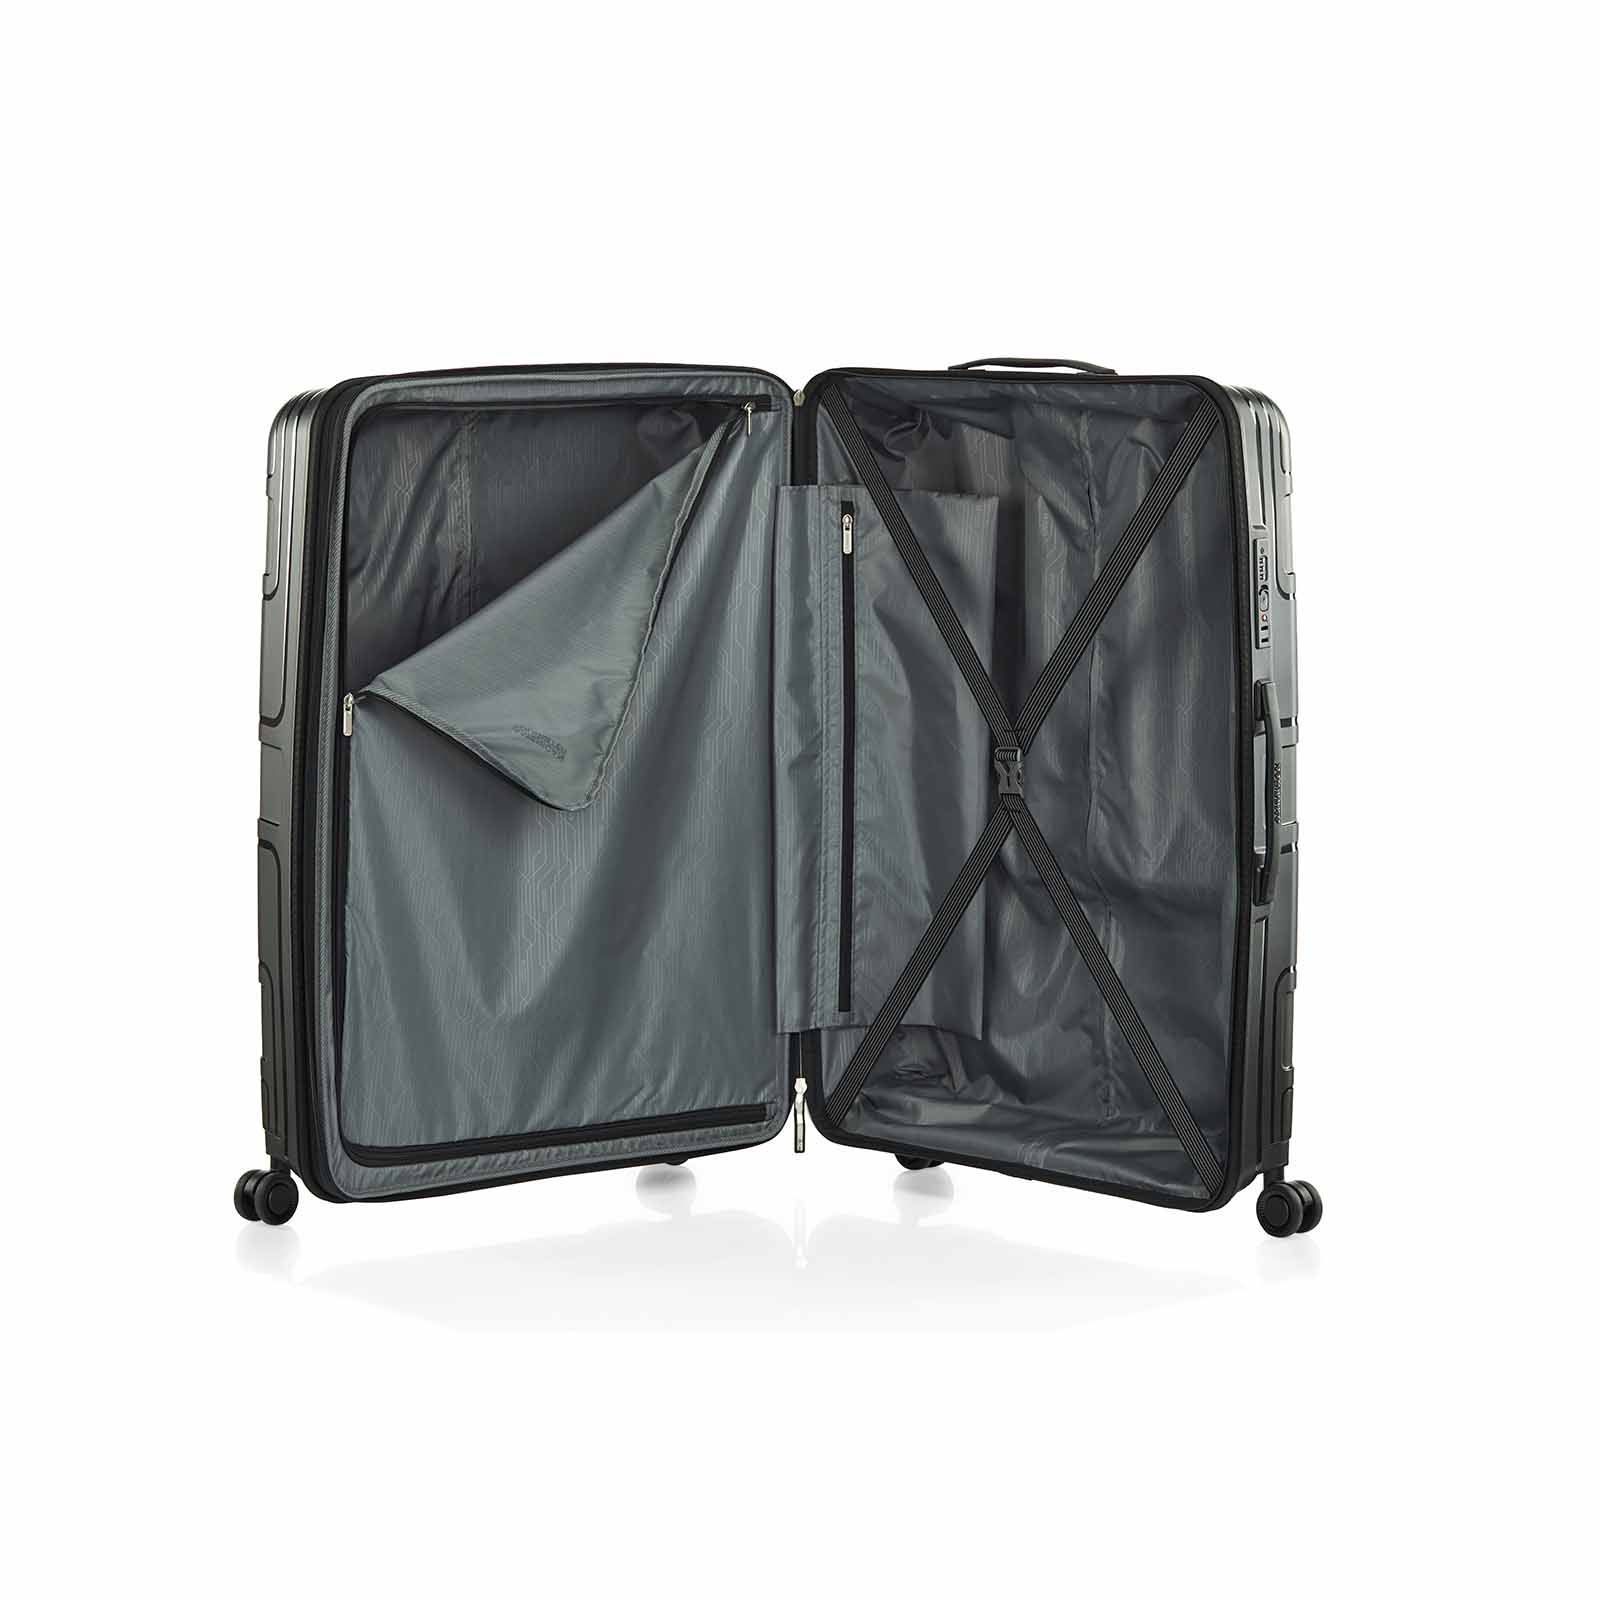 American-Tourister-Light-Max-82cm-Suitcase-Black-Open